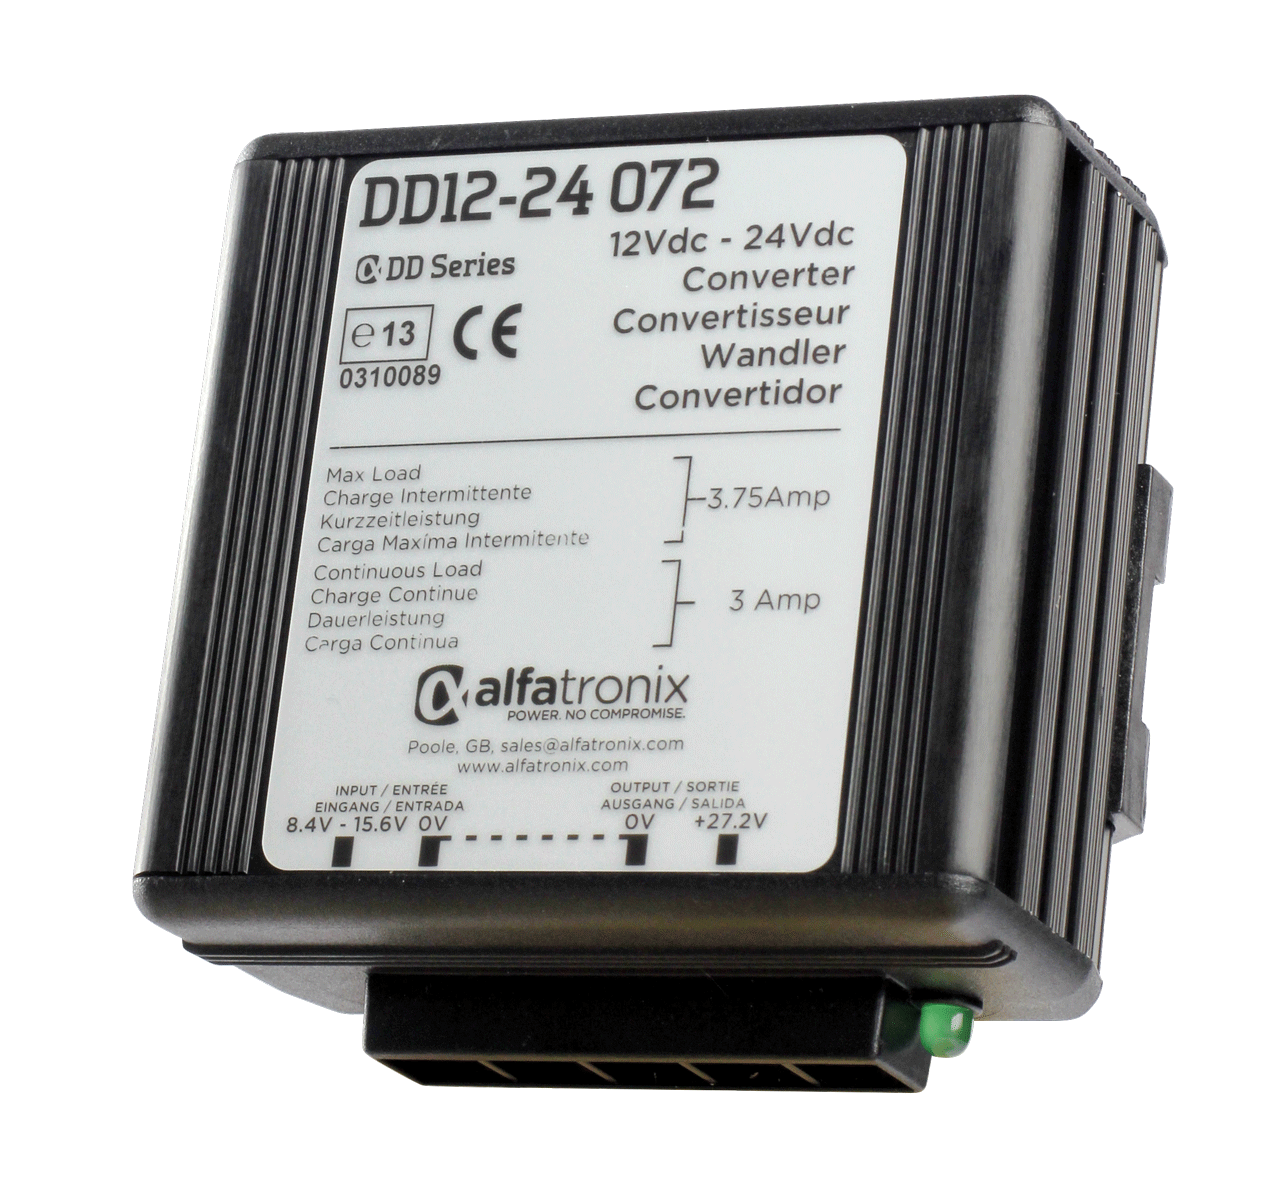 DC DC power supply stabilizer DD12-24-072